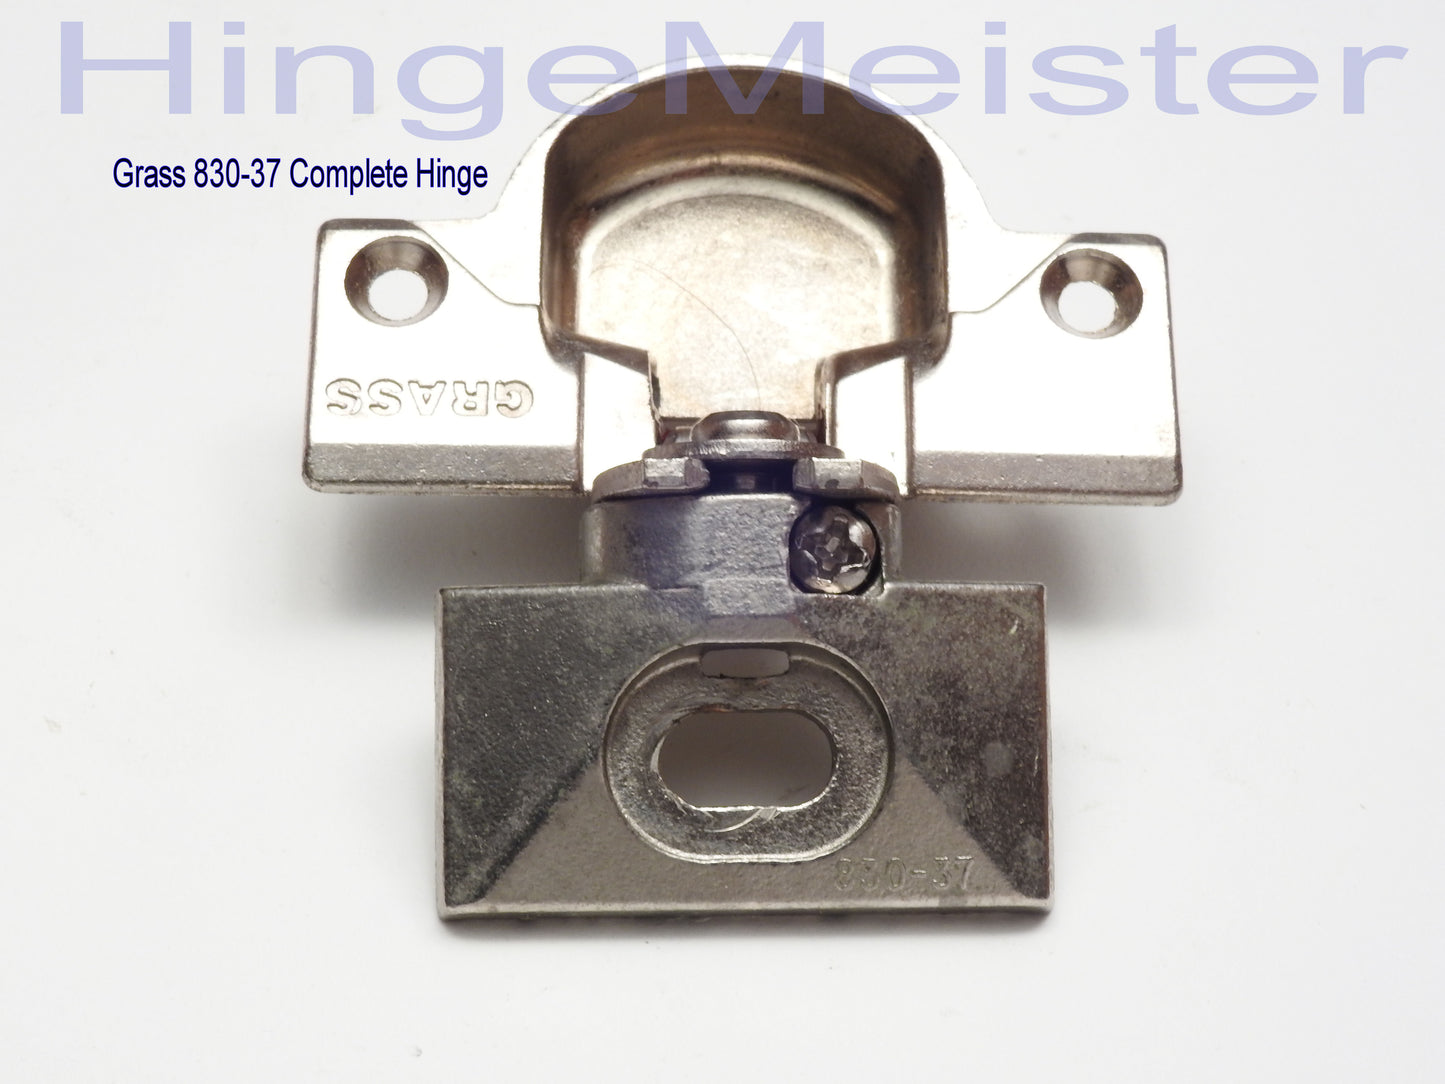 Grass 830-37 Nickel Hinge and mounting plate - Complete Hinge - Refurbished